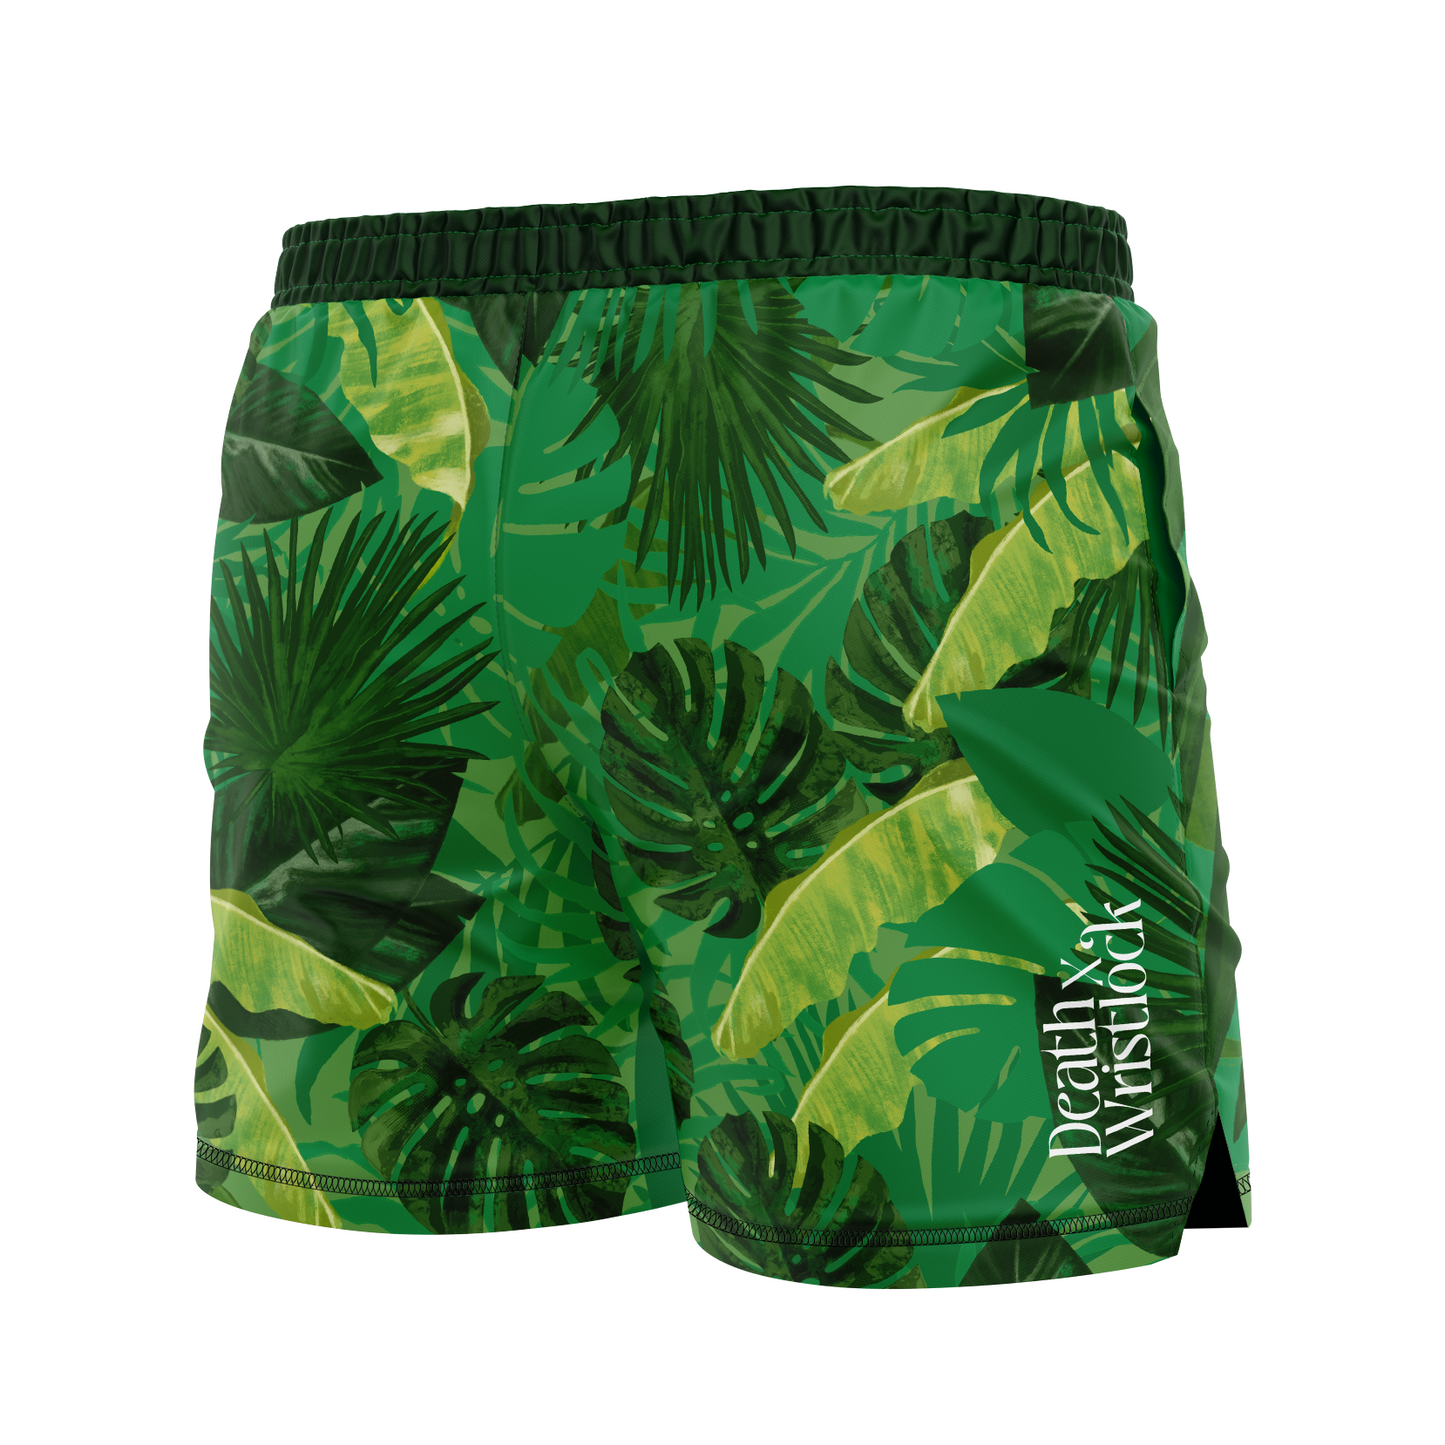 DxW: Tropic Giant men's FC shorts, green